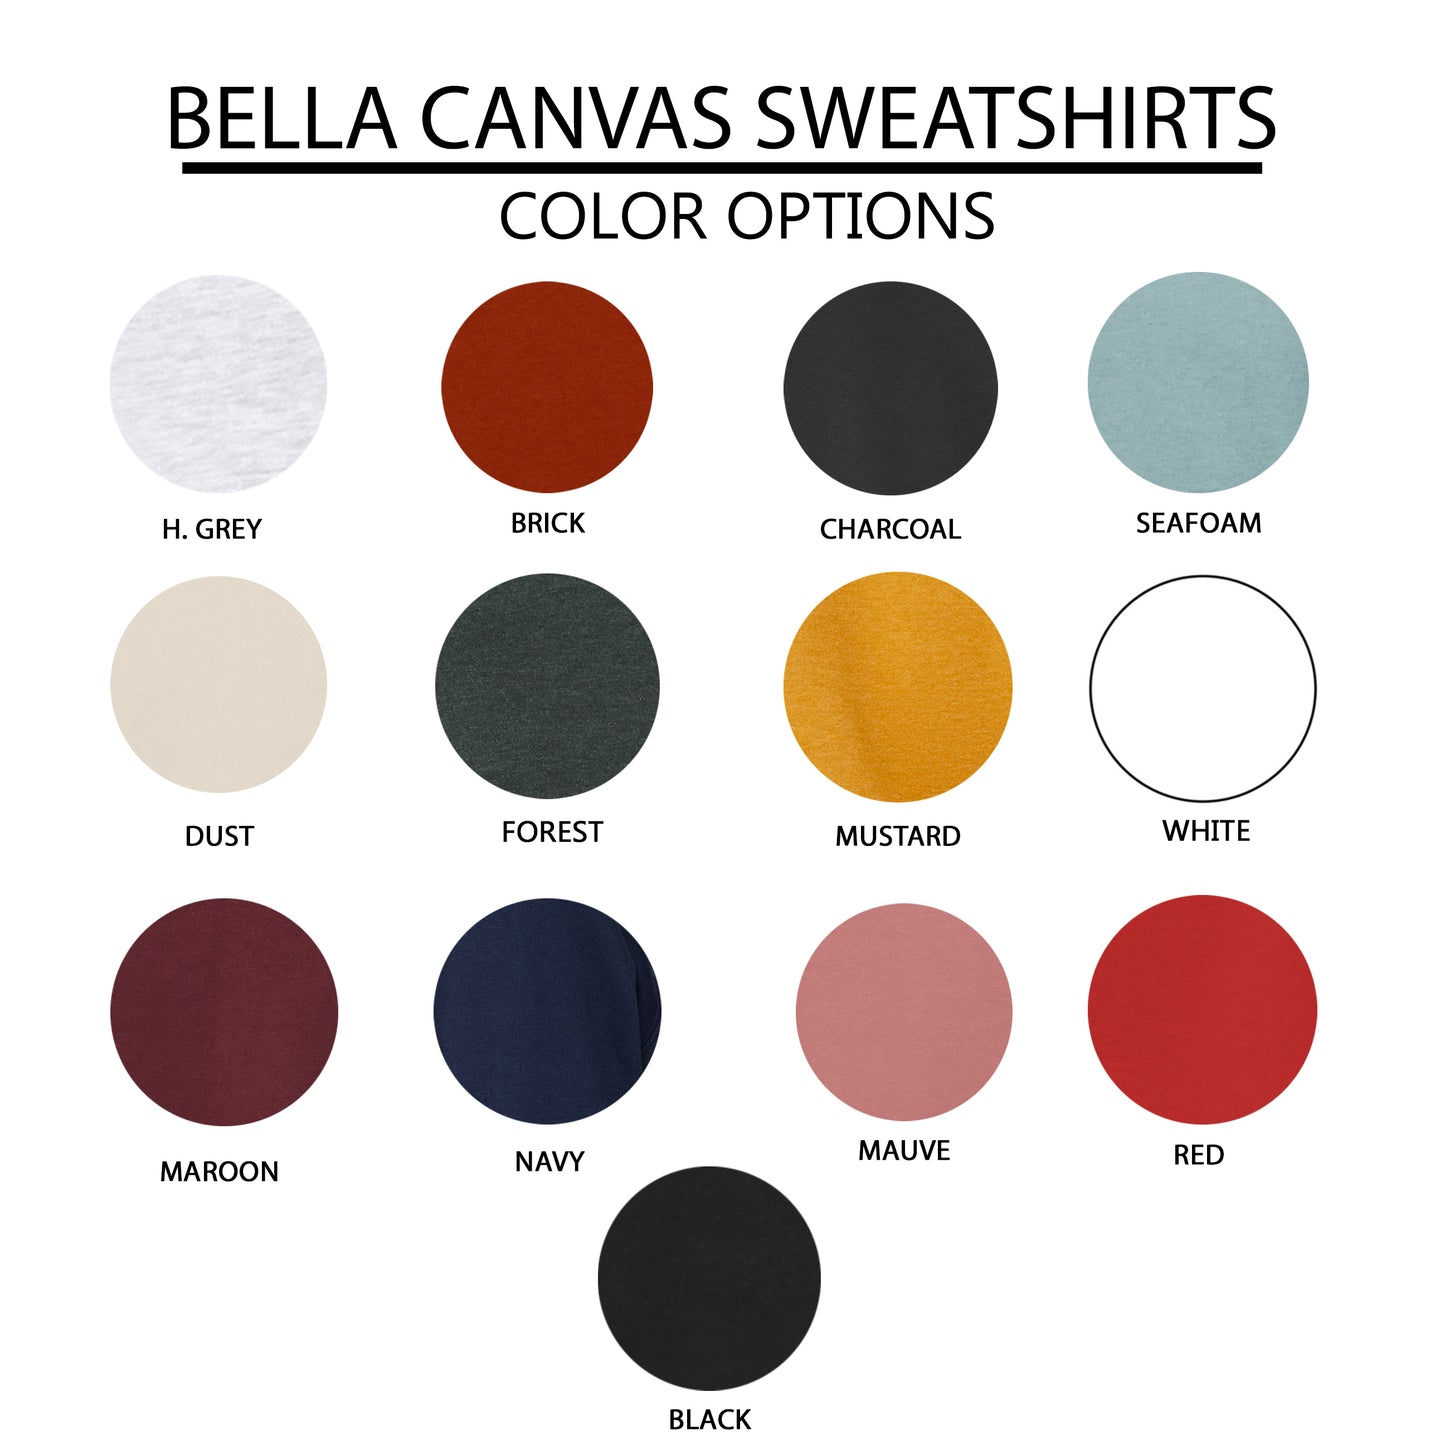 Dear Santa Can I Have A Do Over | Bella Canvas Sweatshirt